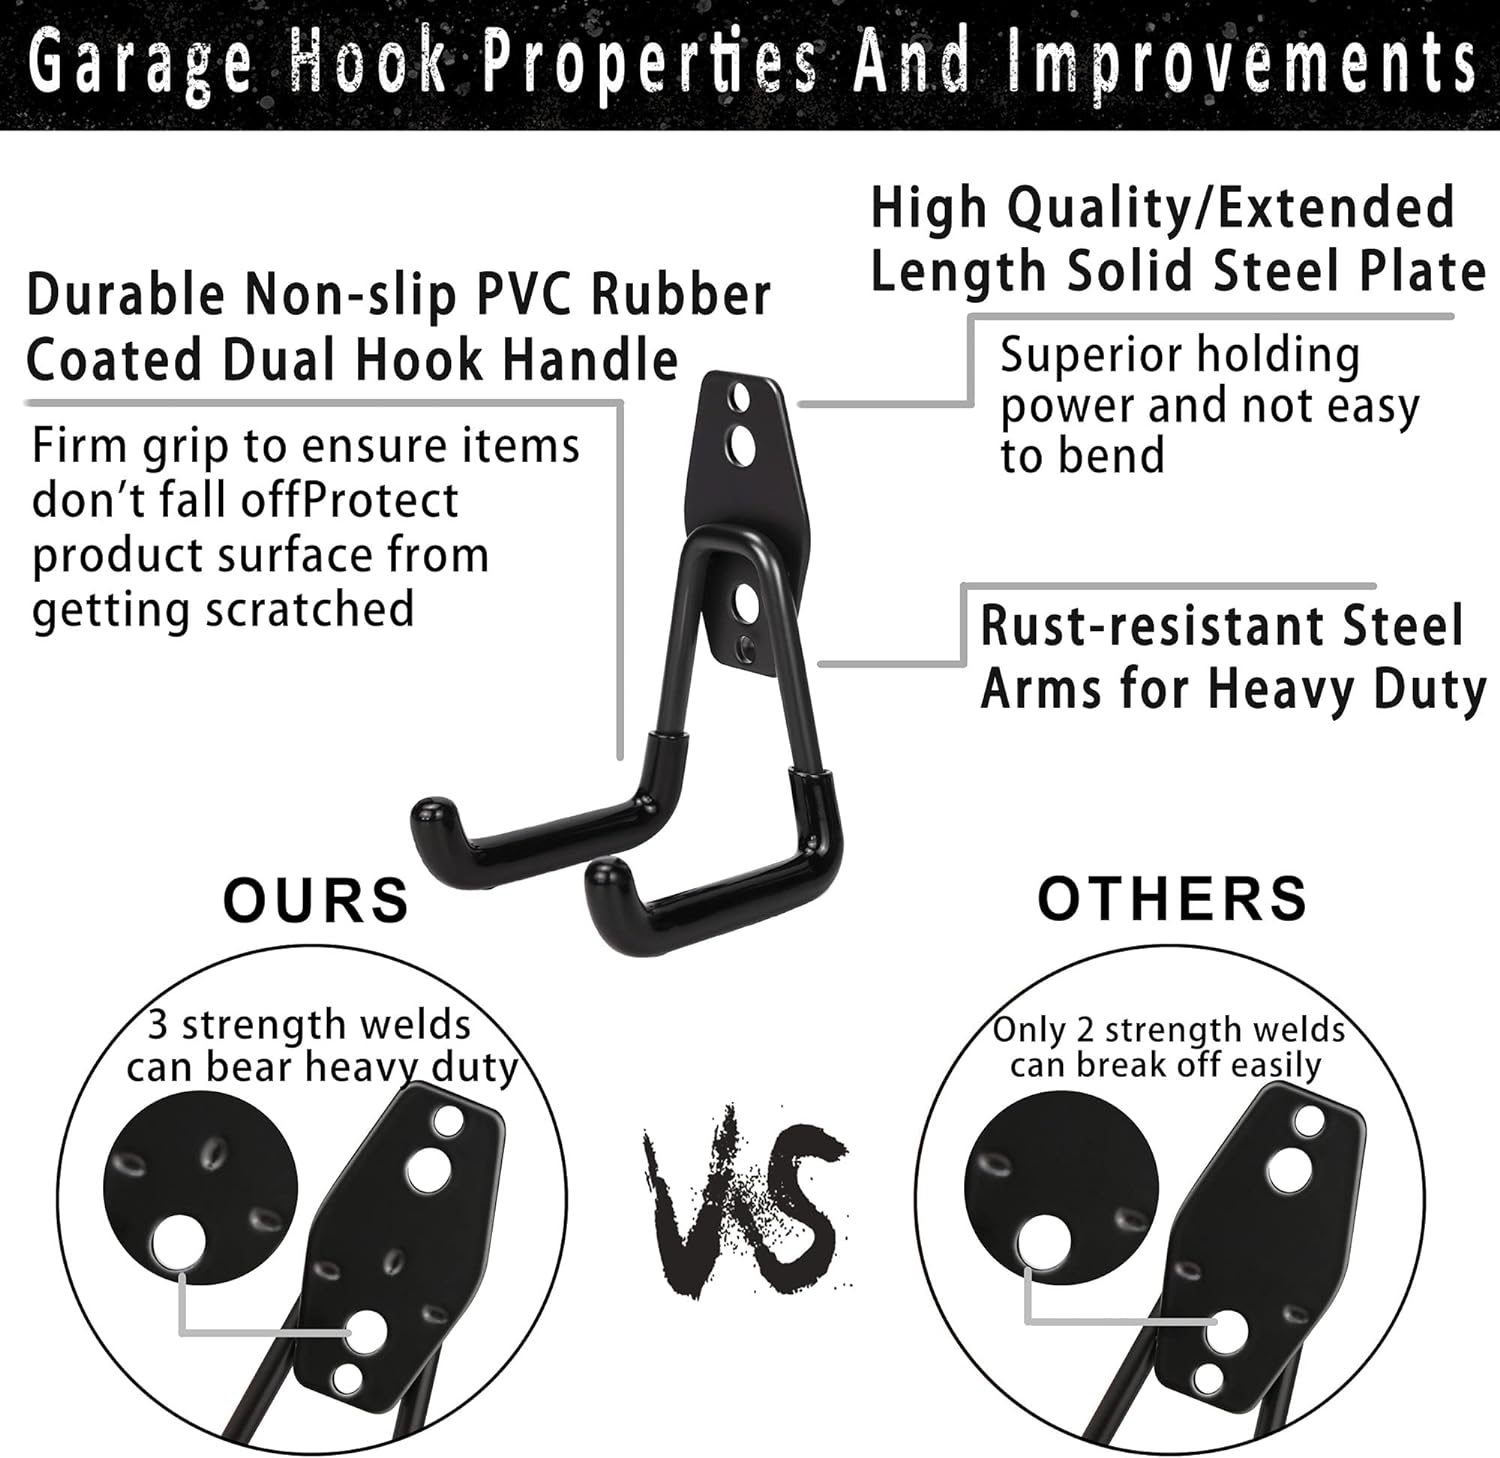 KOFANI Garage Hooks, 16 Pack Steel Heavy Duty Garage Storage Hooks with Anti-Slip Coating, Utility Garage Wall Mount Hooks for Hanging